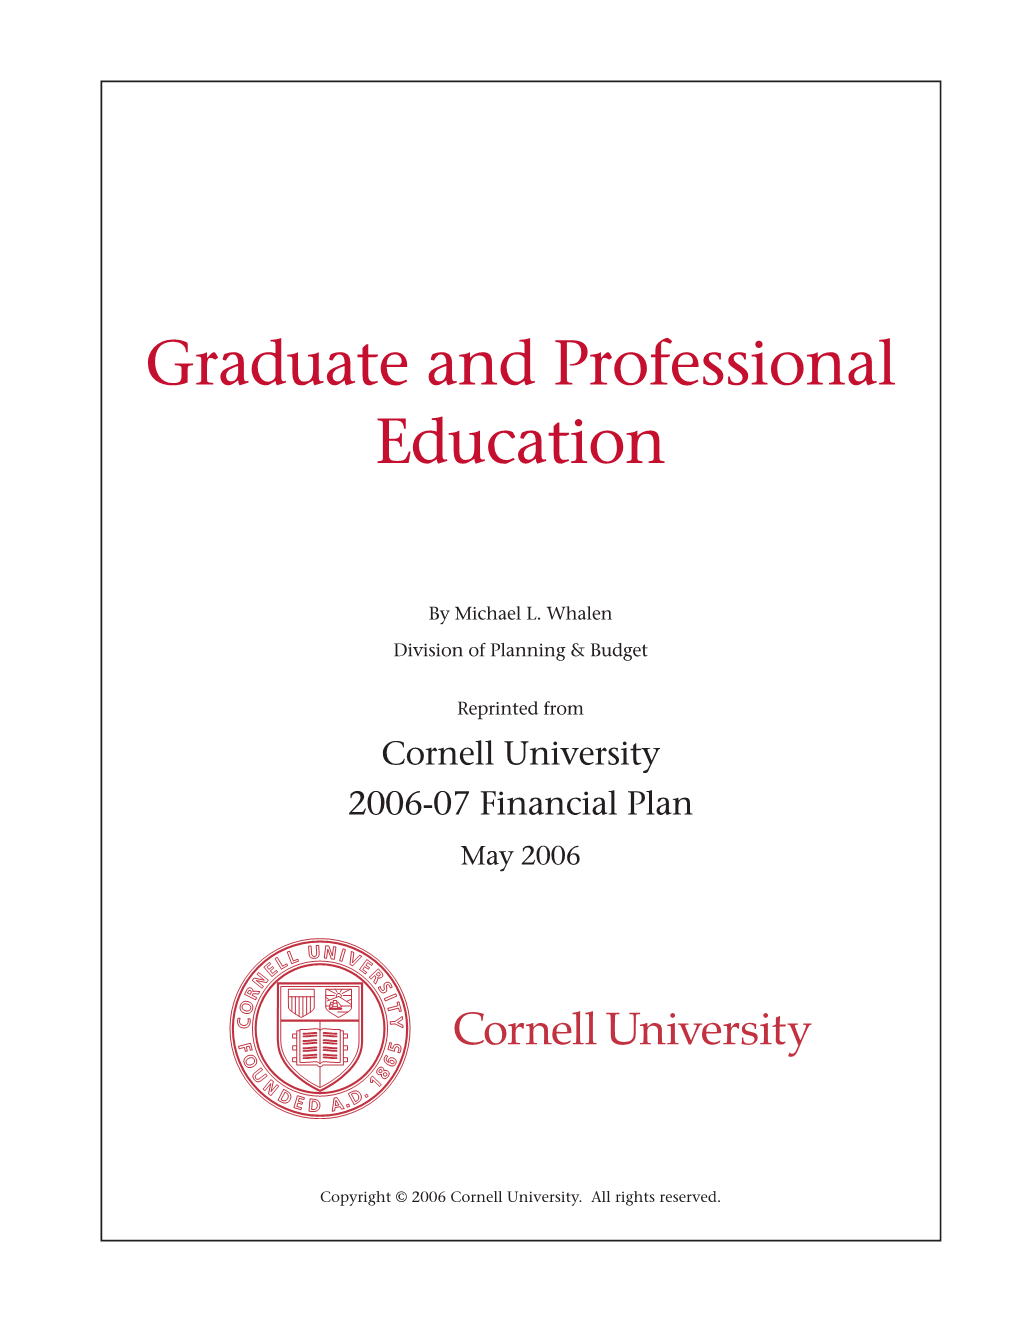 Graduate and Professional Education